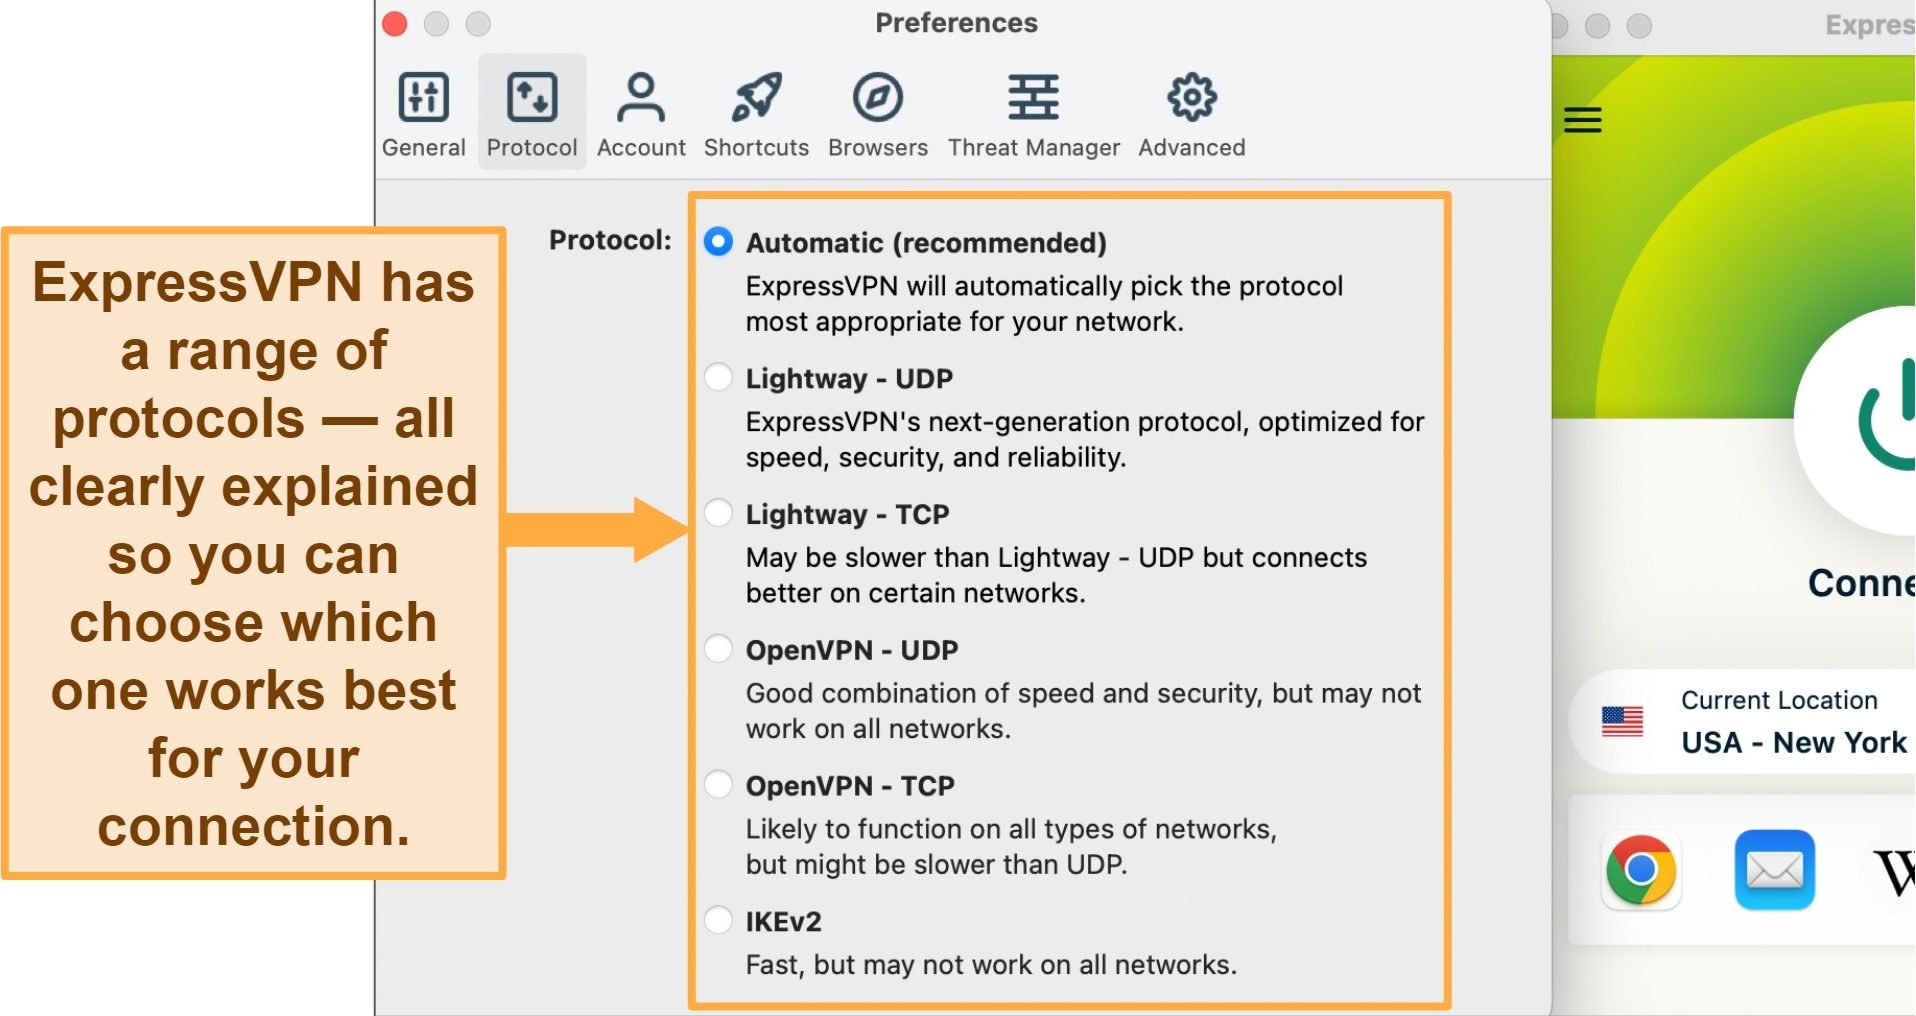 Image of ExpressVPN's Protocol menu showing various VPN protocols